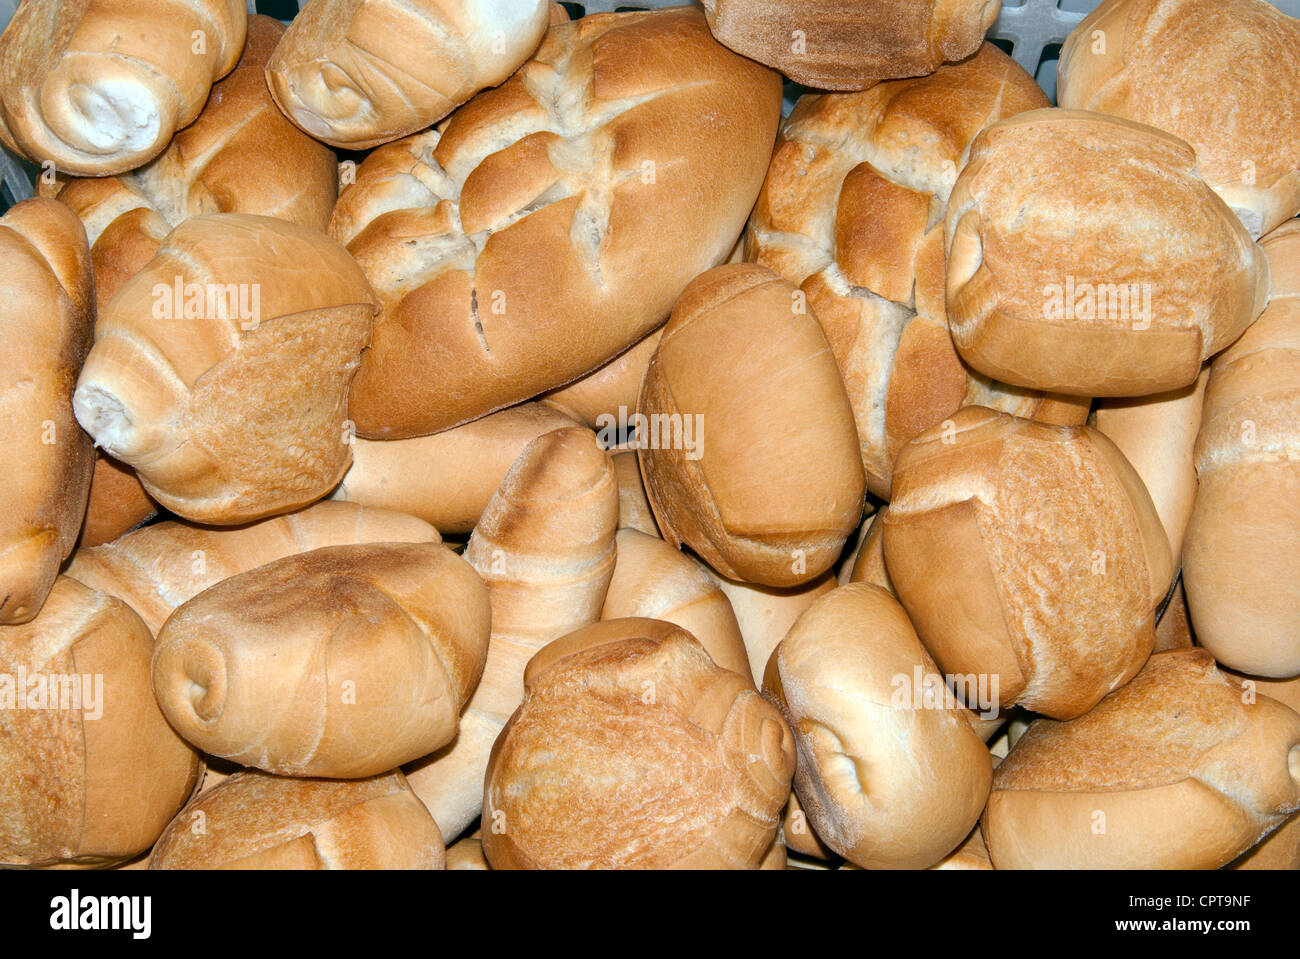 Bread (Panini), Italian cooking, Italy Stock Photo